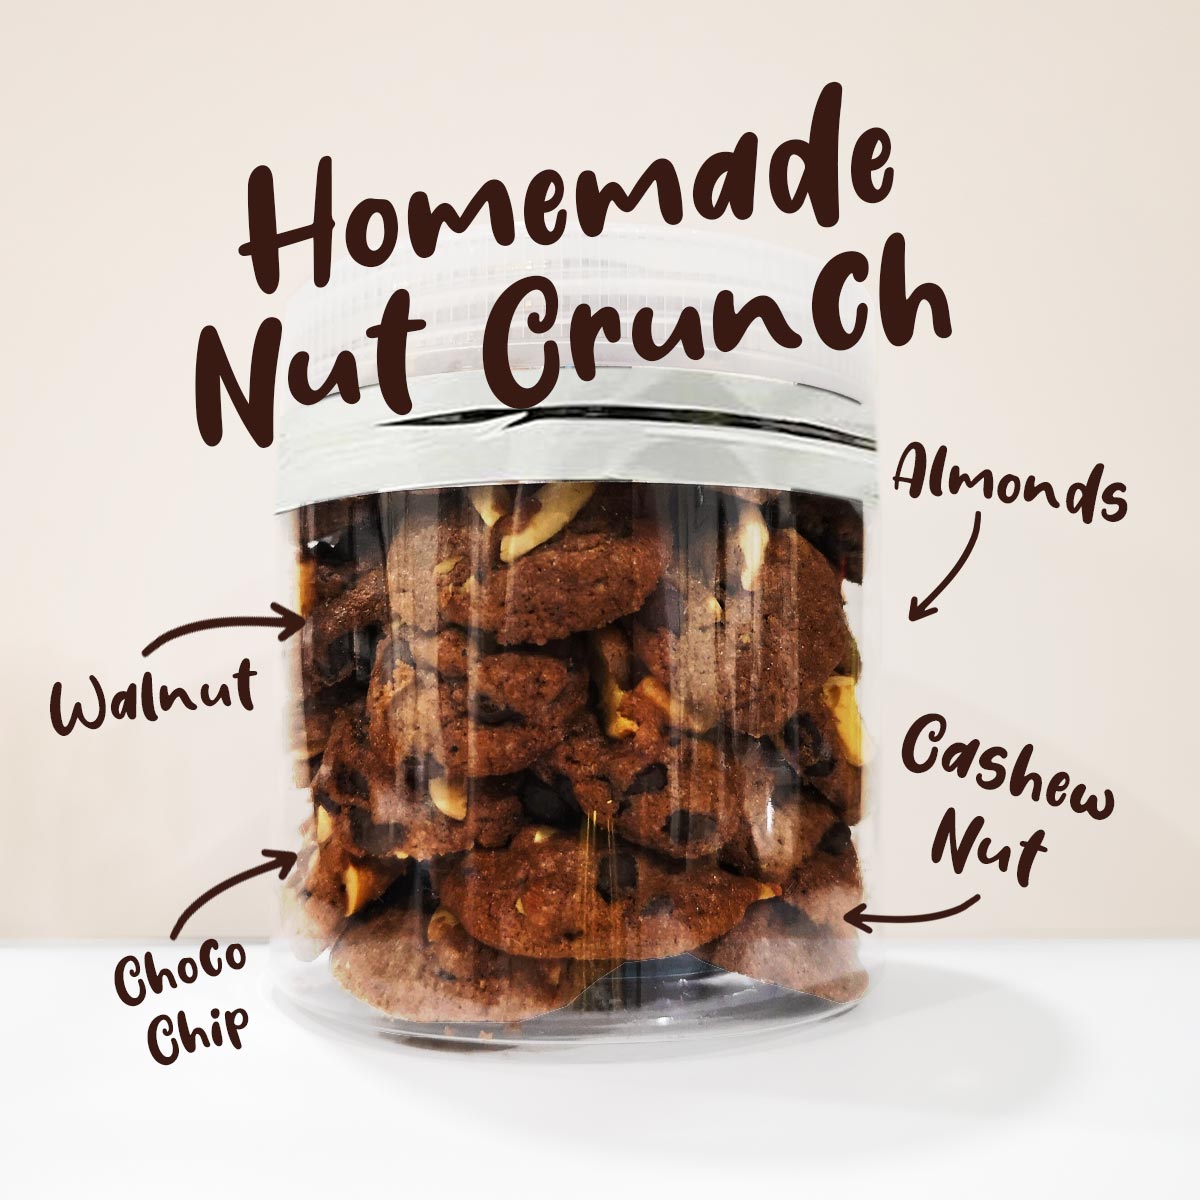 Homemade Nut Crunch (Walnut, Almond, Cashew nut, Choco chip)